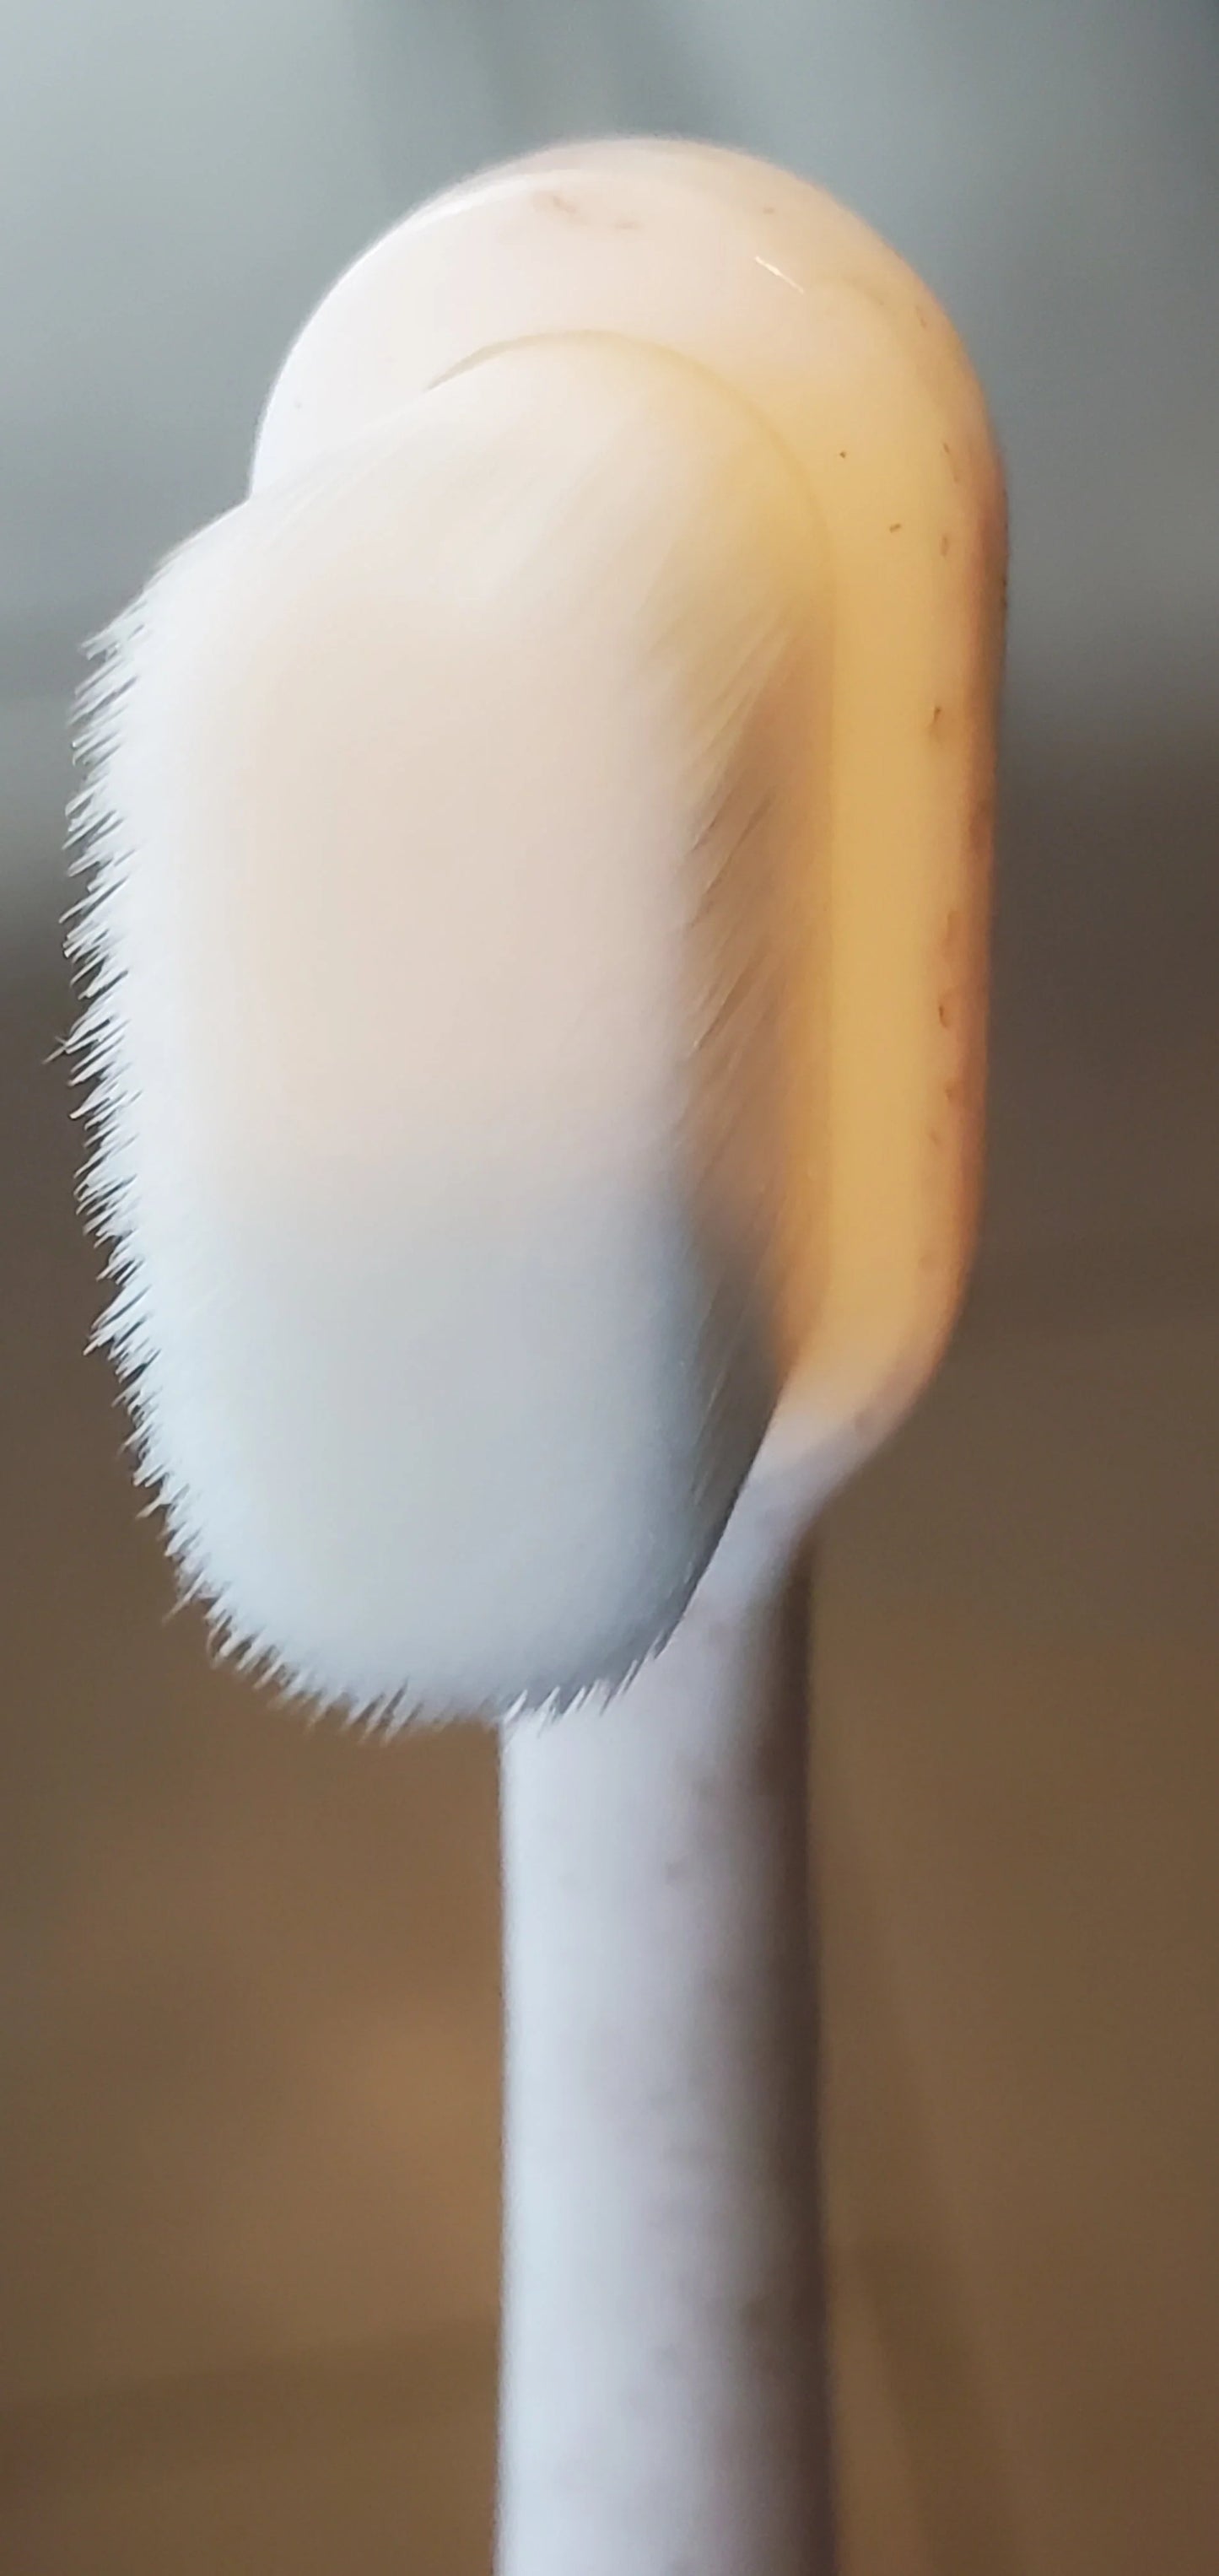 Puppy Polisher Wheat Straw Toothbrush